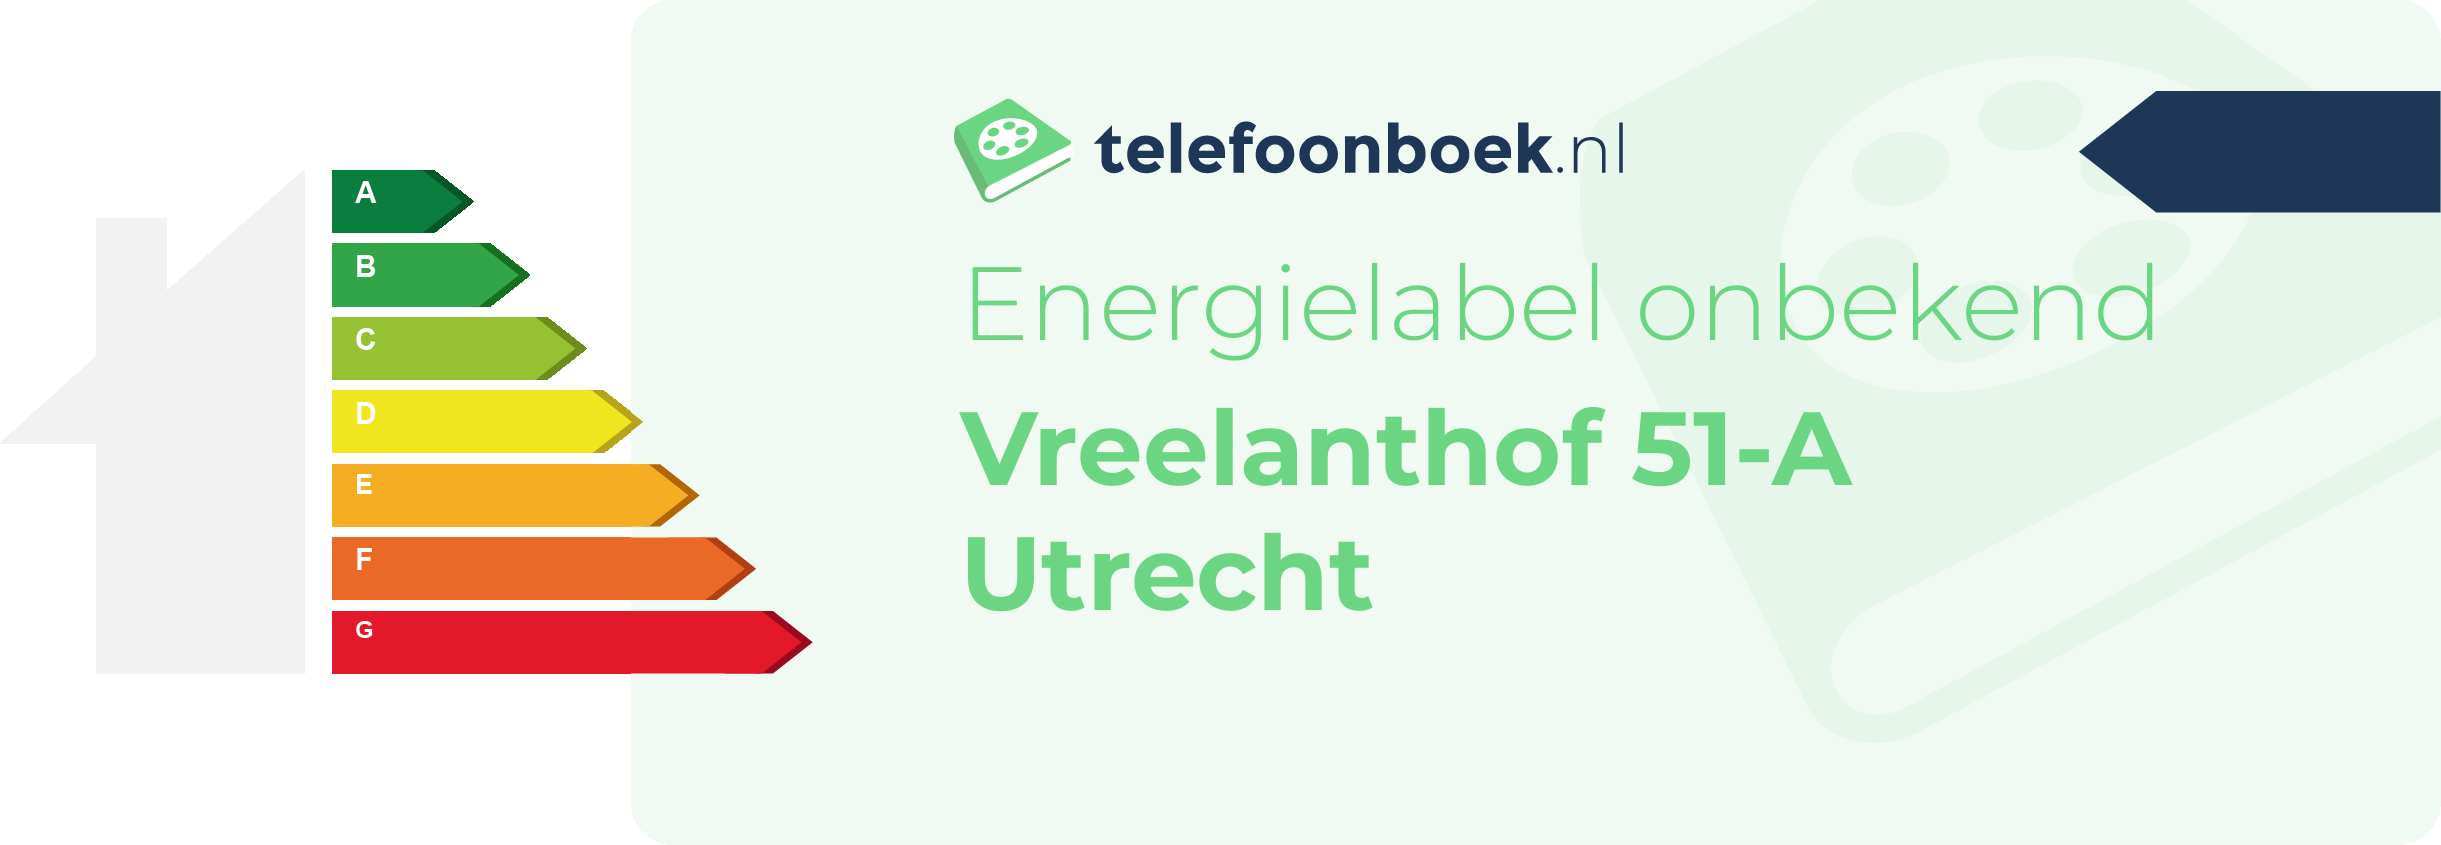 Energielabel Vreelanthof 51-A Utrecht